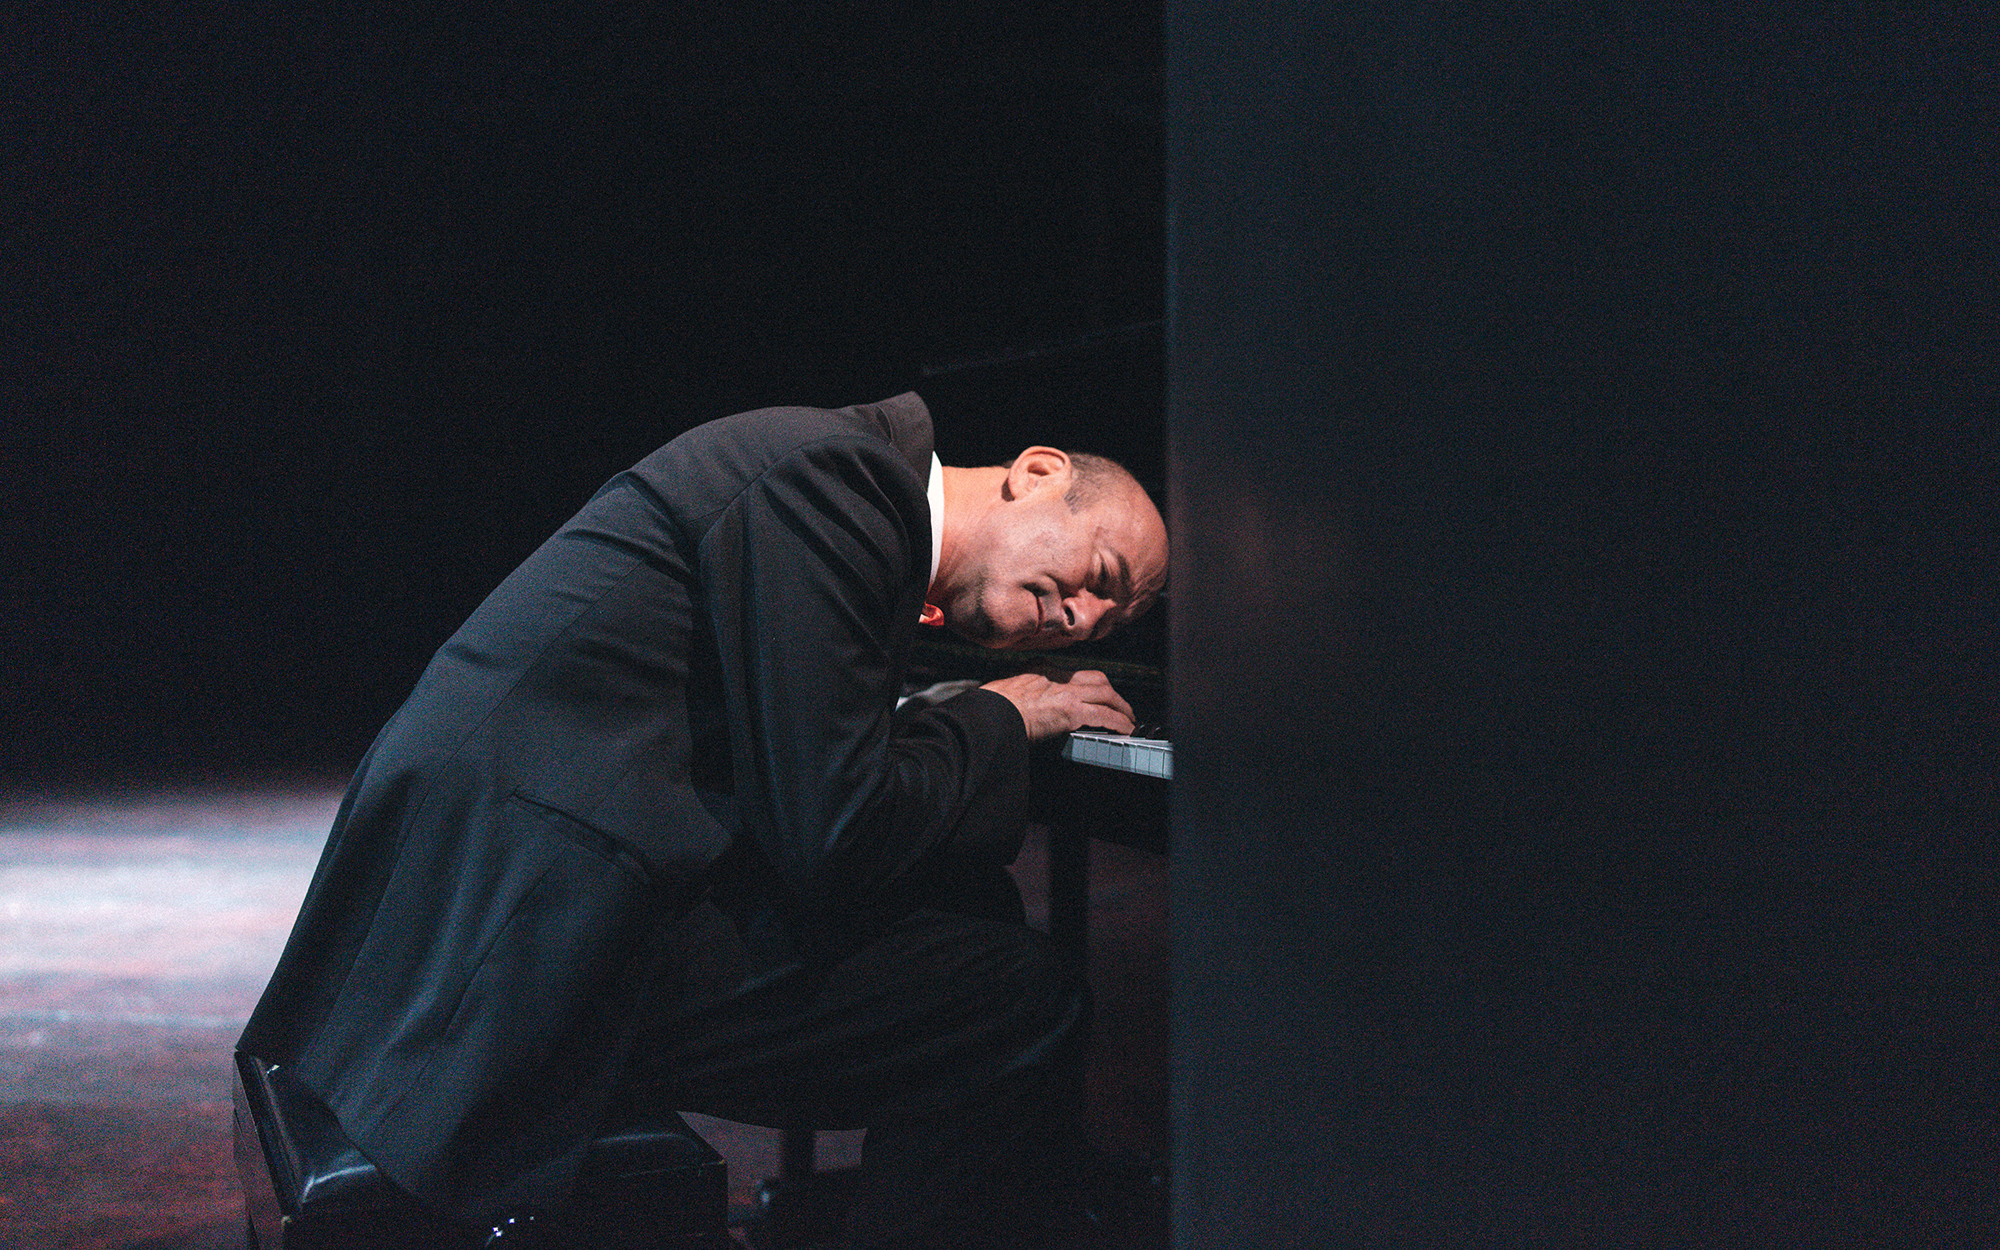 Firs (Boris Ostan) igra na pianino, z glavo je prislonjen h klaviaturi, kot da prisluškuje tipkam.